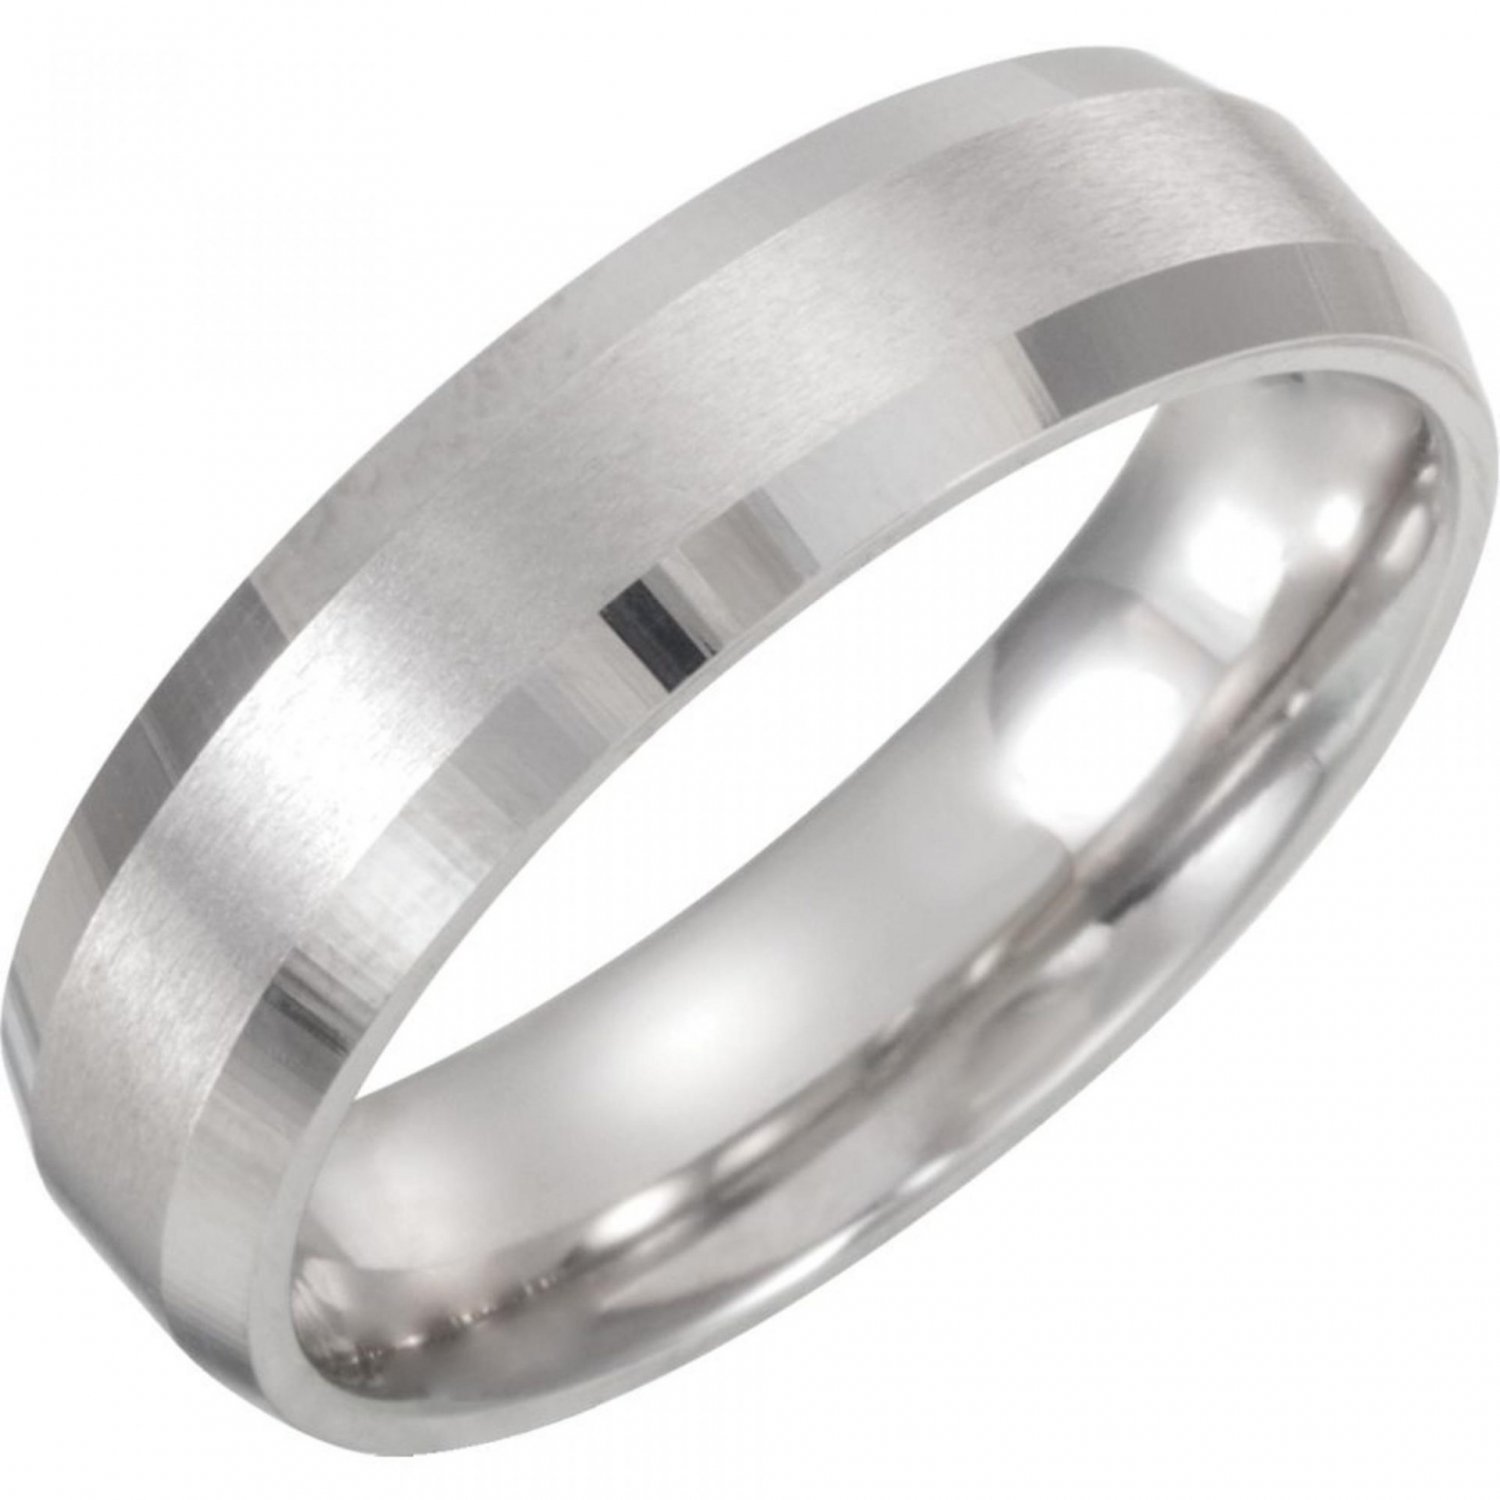 Mens 6mm Platinum Wedding Band With Beveled Edge Grants Jewelry